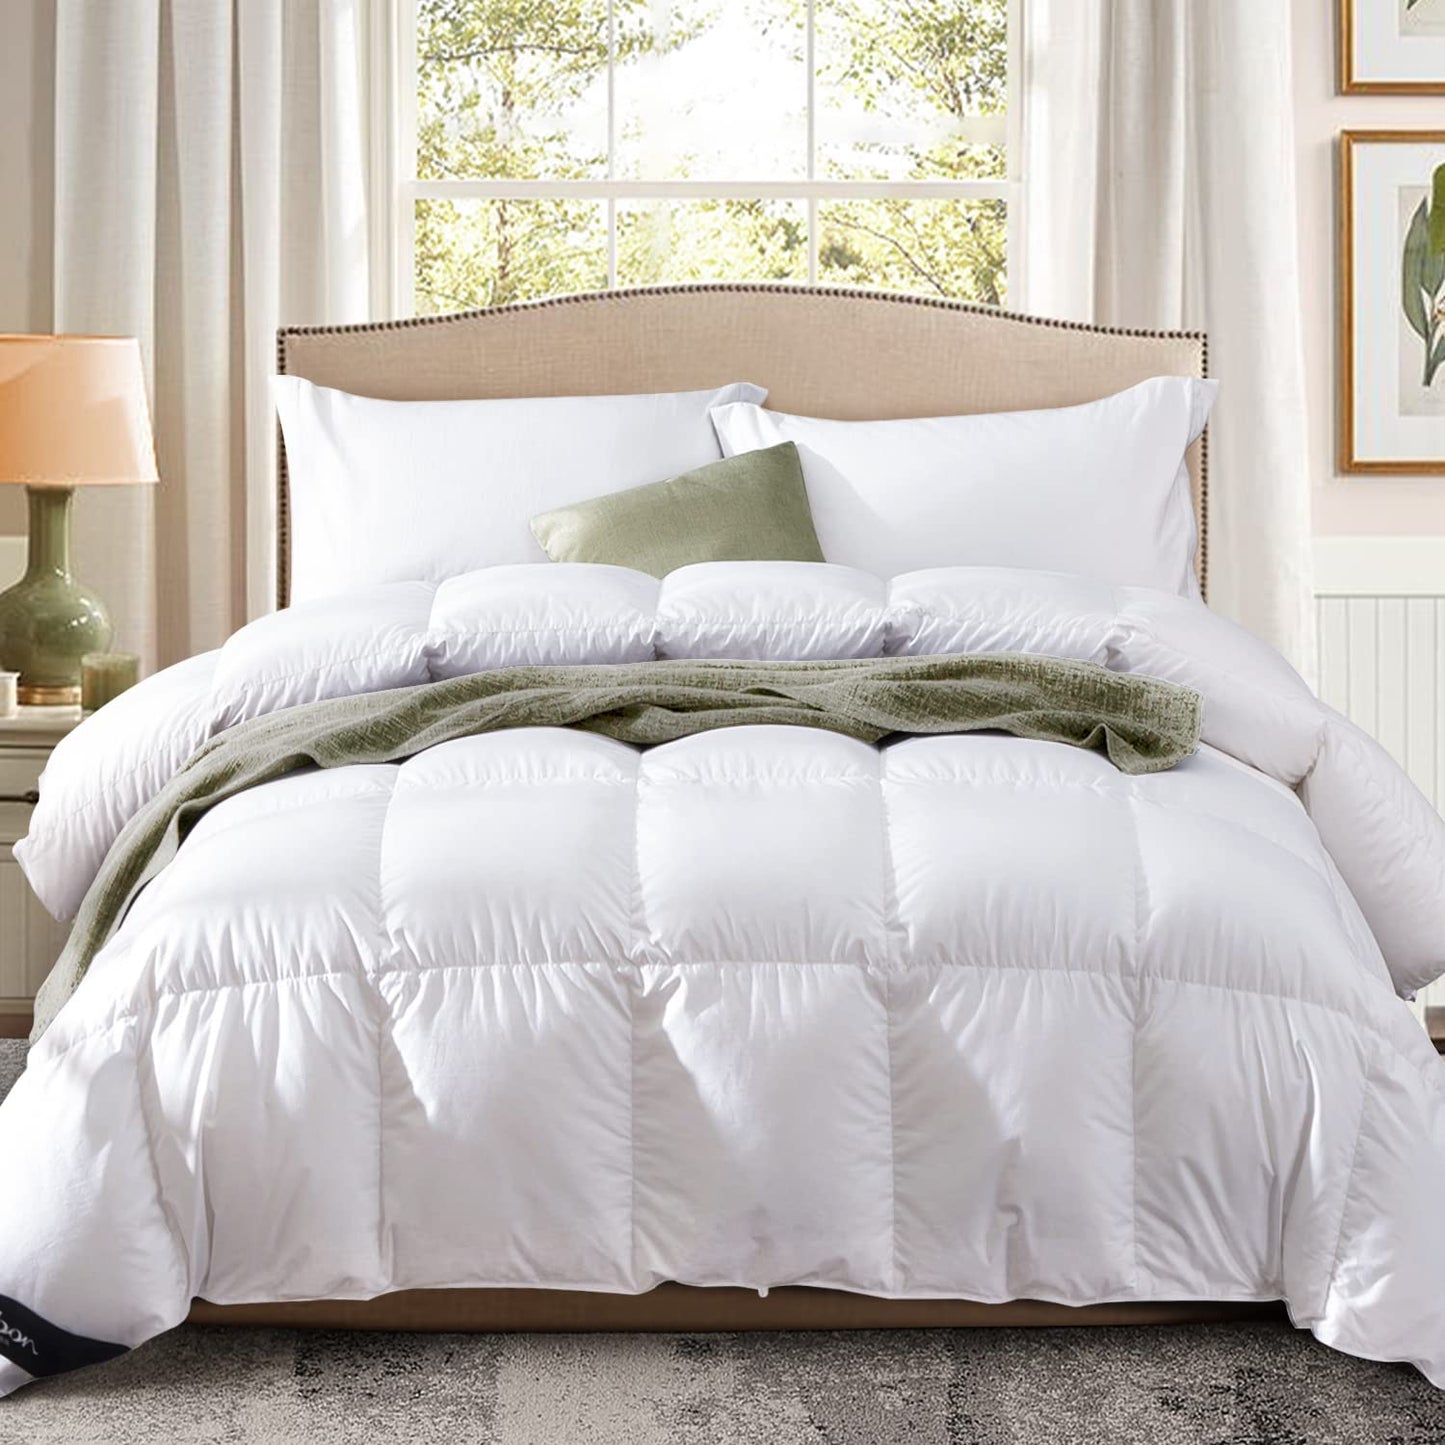 Goose down Comforter King Size All Season Duvet Insert Ultra-Soft 100% Cotton, 45OZ,650 Fill Power, Medium Warmth with Corner Tabs, White